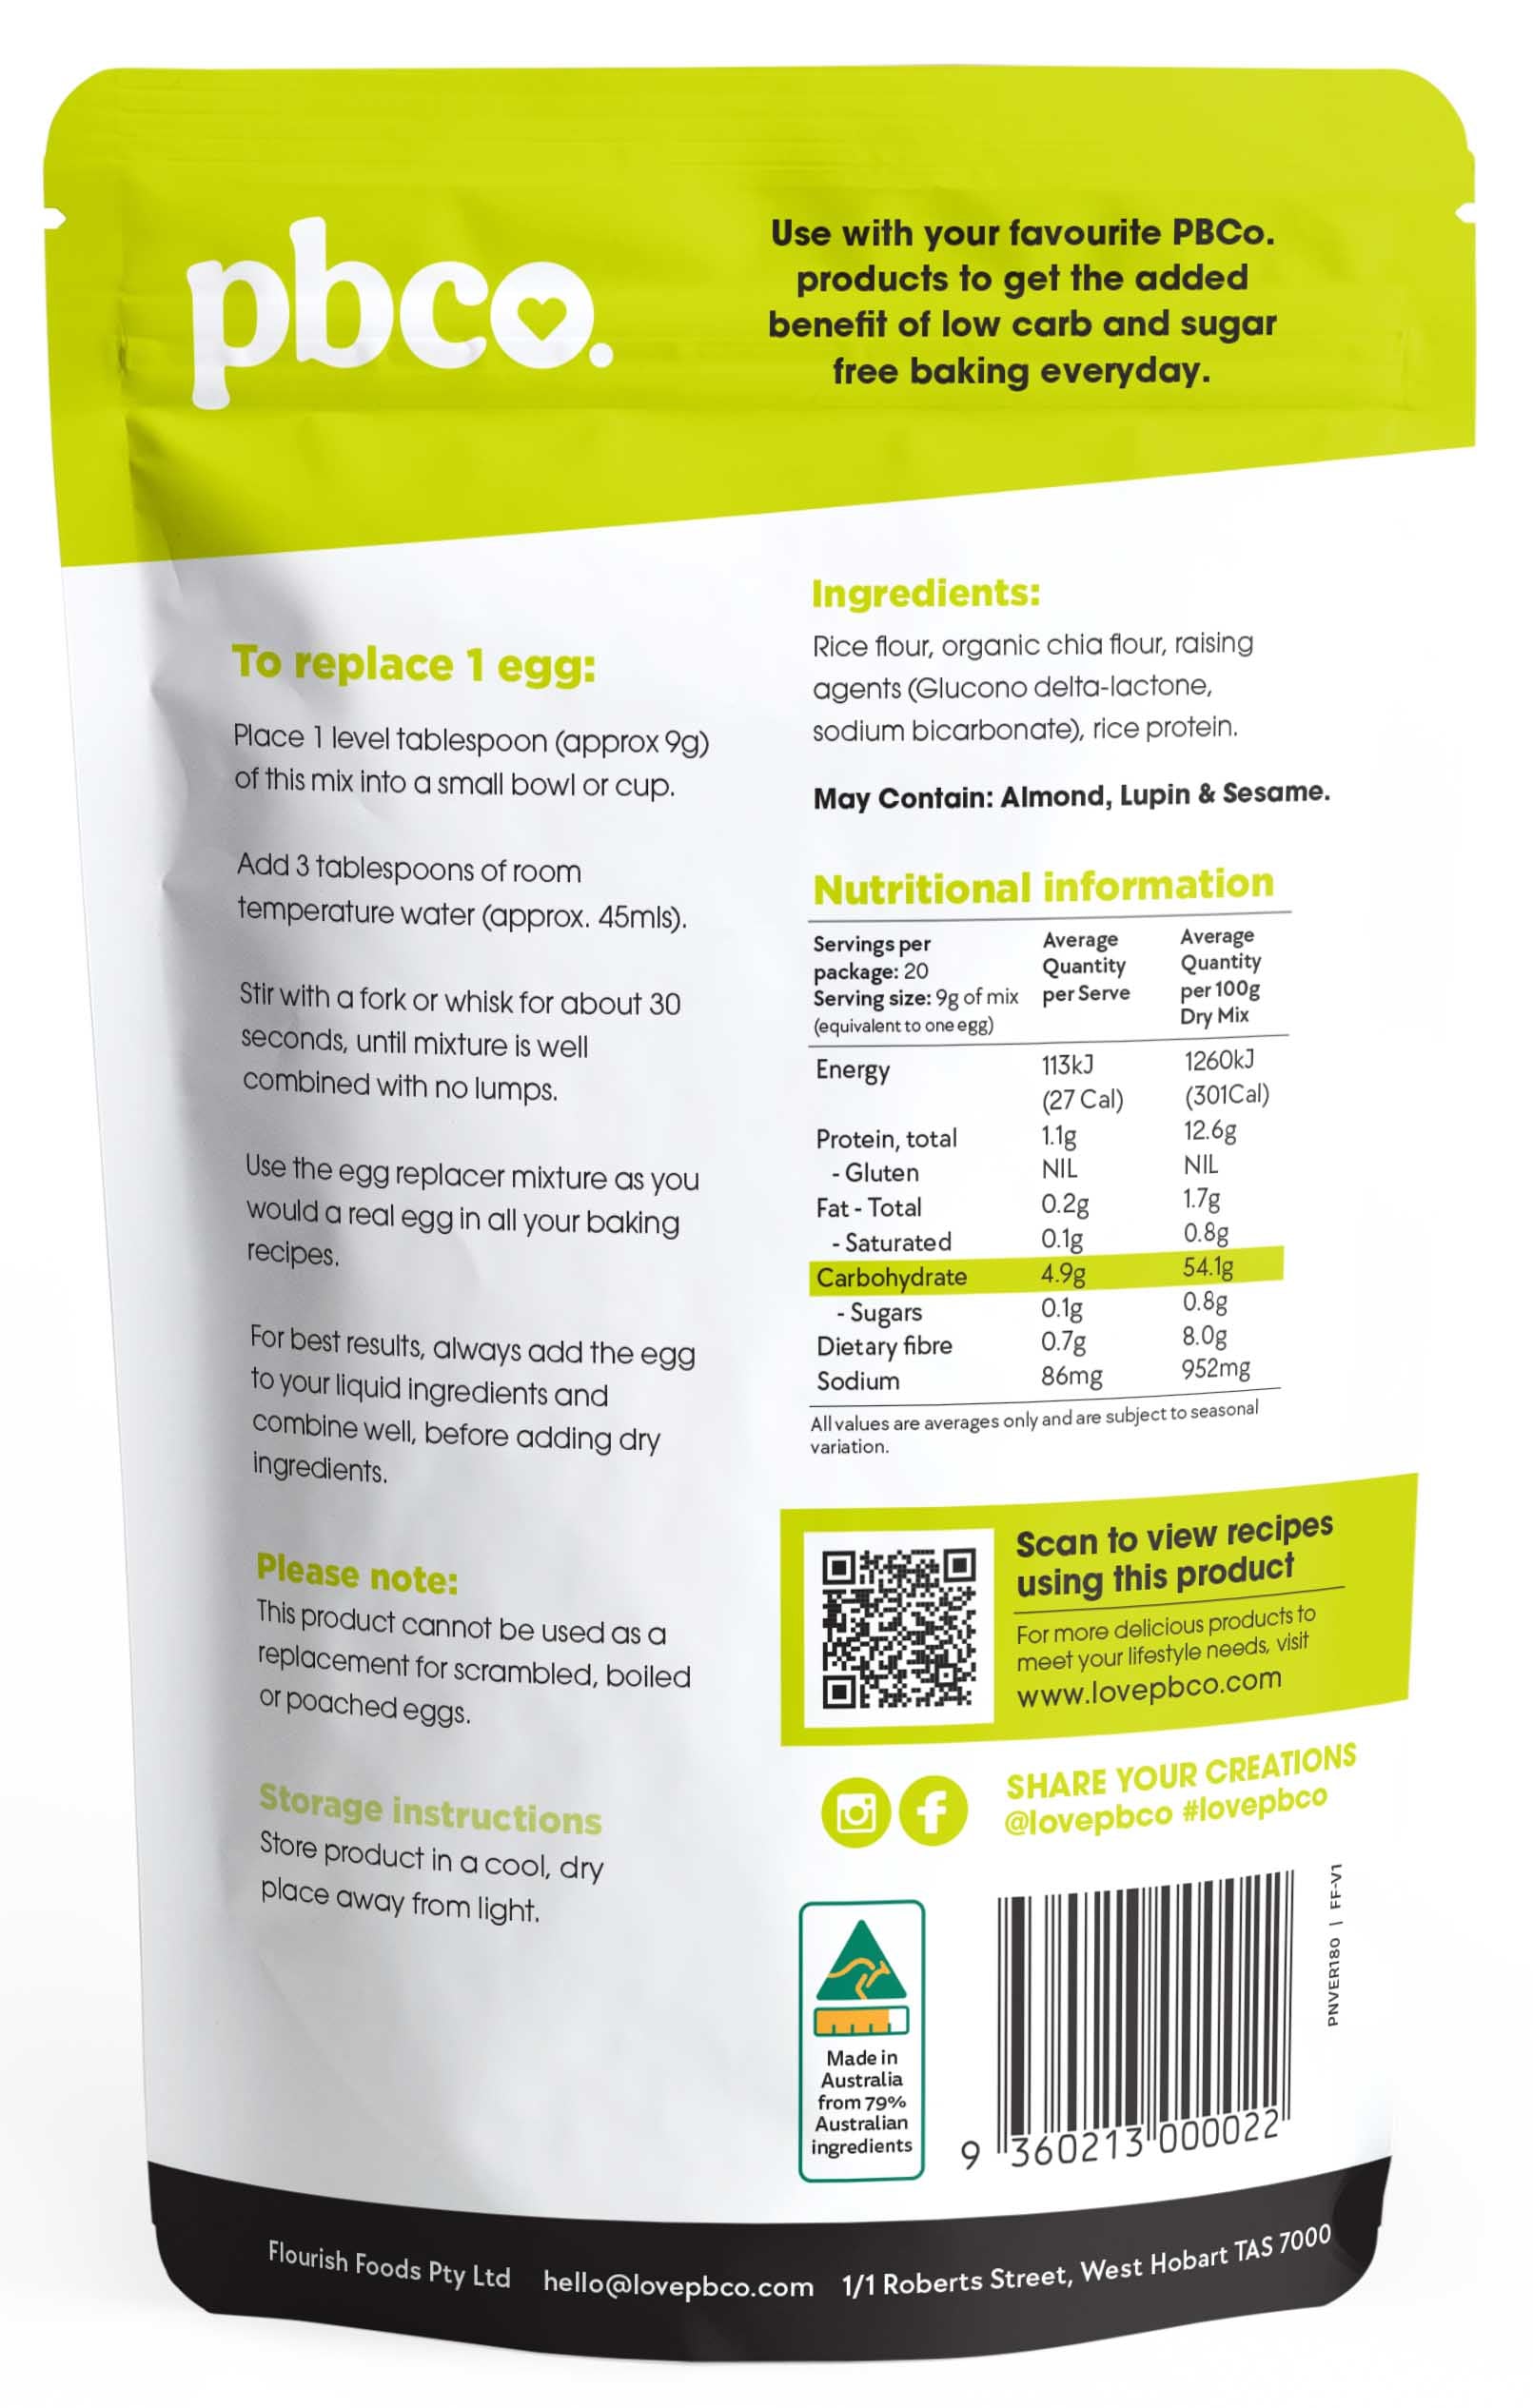 Vegan Egg Replacer - 180g - Low carb & sugar free Pantry Staples - Just $8.95! Shop now at PBCo.